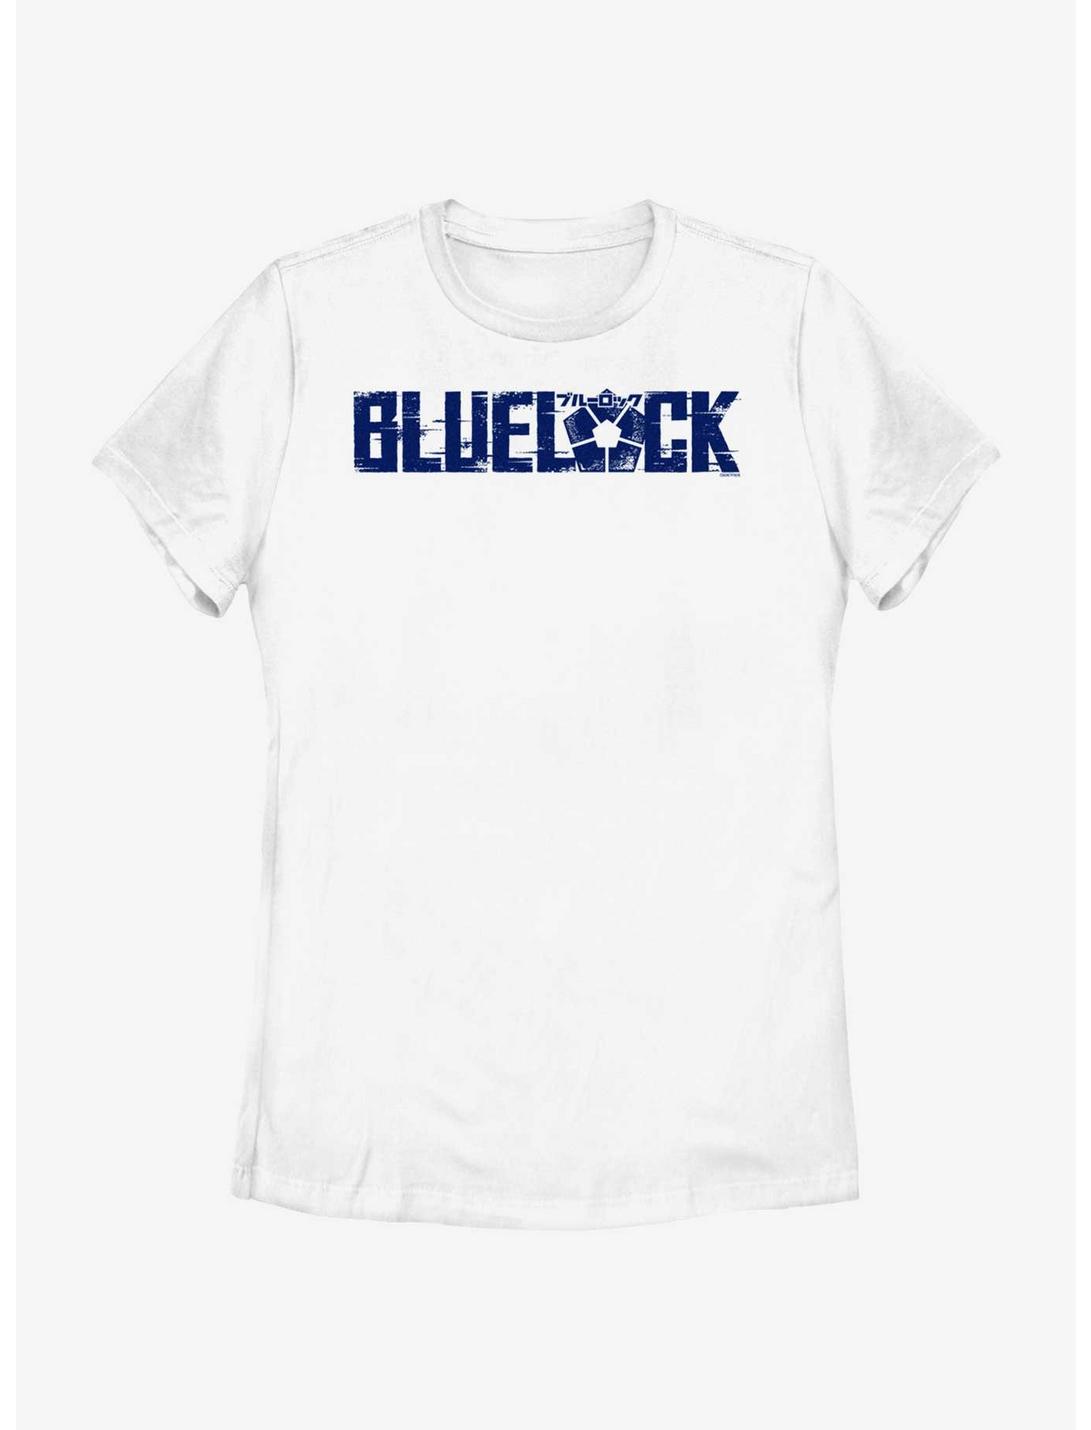 Blue Lock Glitch Logo Womens T-Shirt, WHITE, hi-res